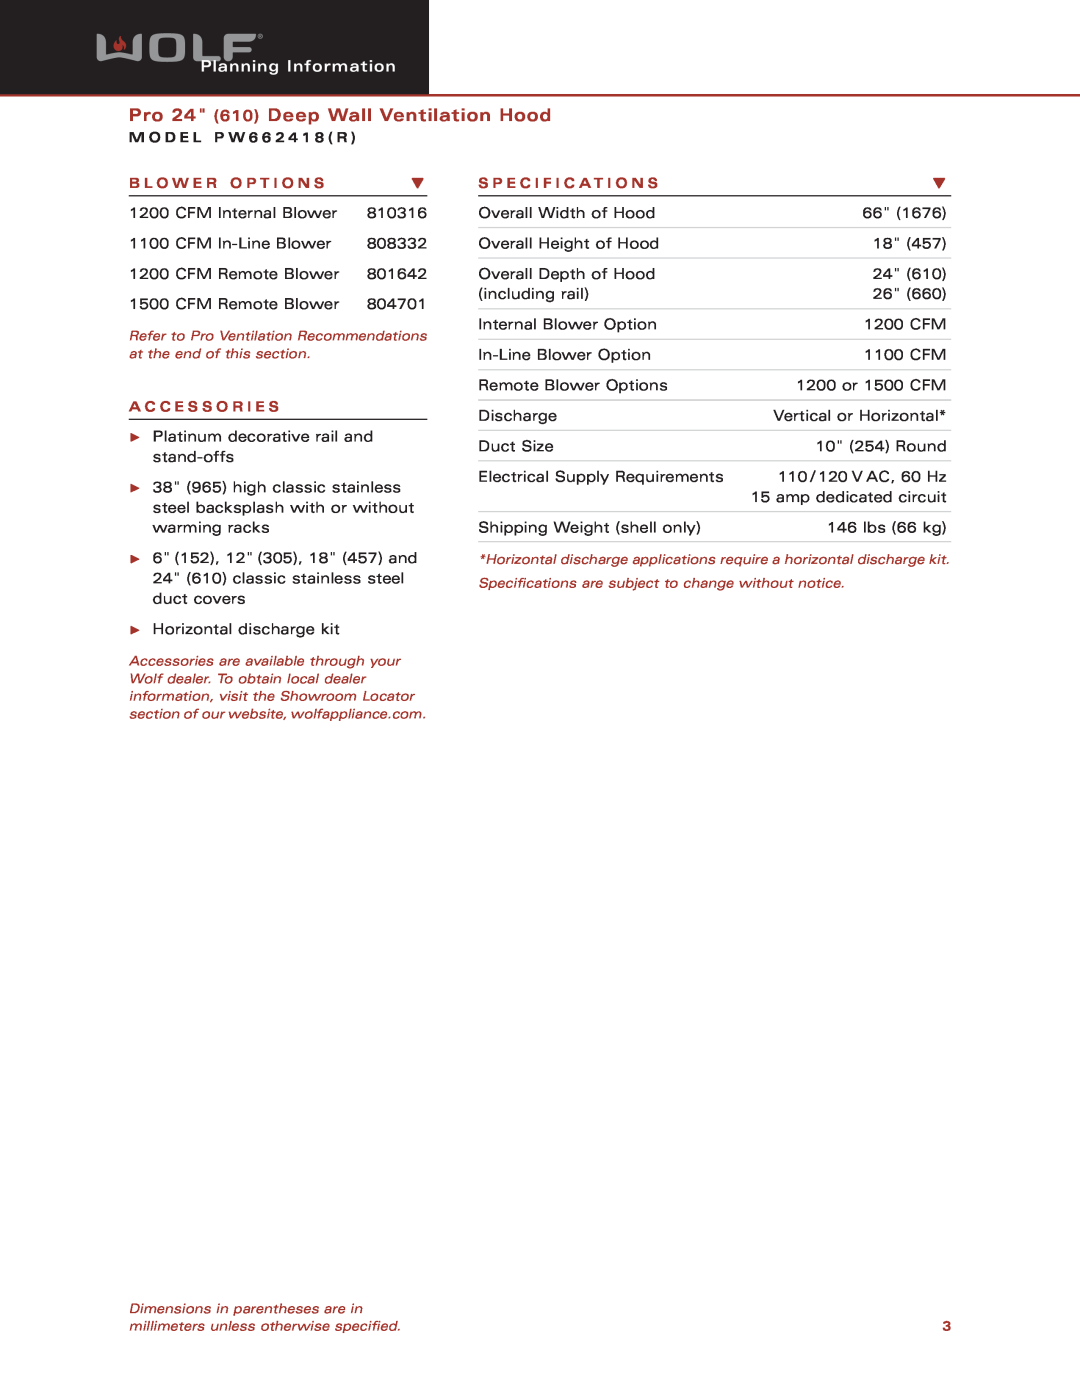 Wolf Appliance Company PW662418 Planning Information, Pro 24 610 Deep Wall Ventilation Hood M O D E L P W 6 6 2 4 1 8 R 